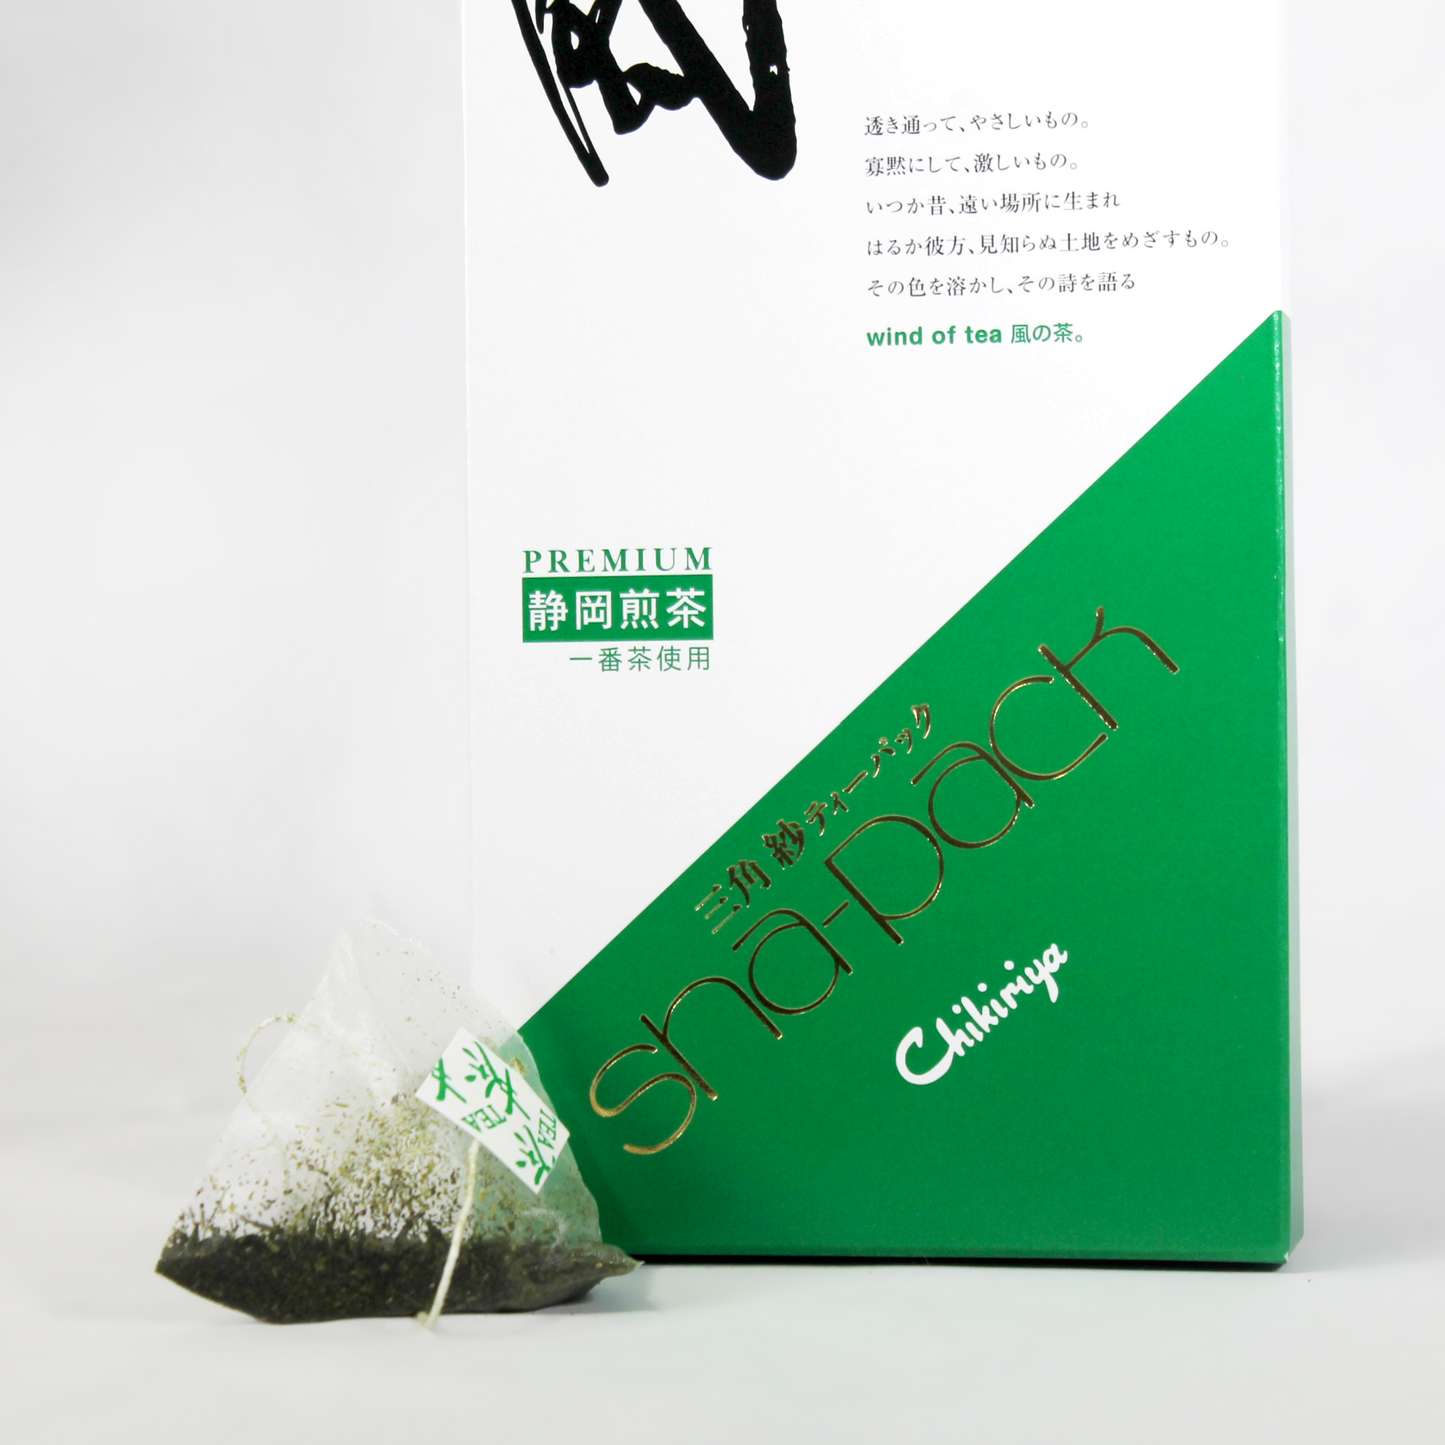 Premium Shizuoka Sencha - 20 Tea bags - Kaze no Cha series